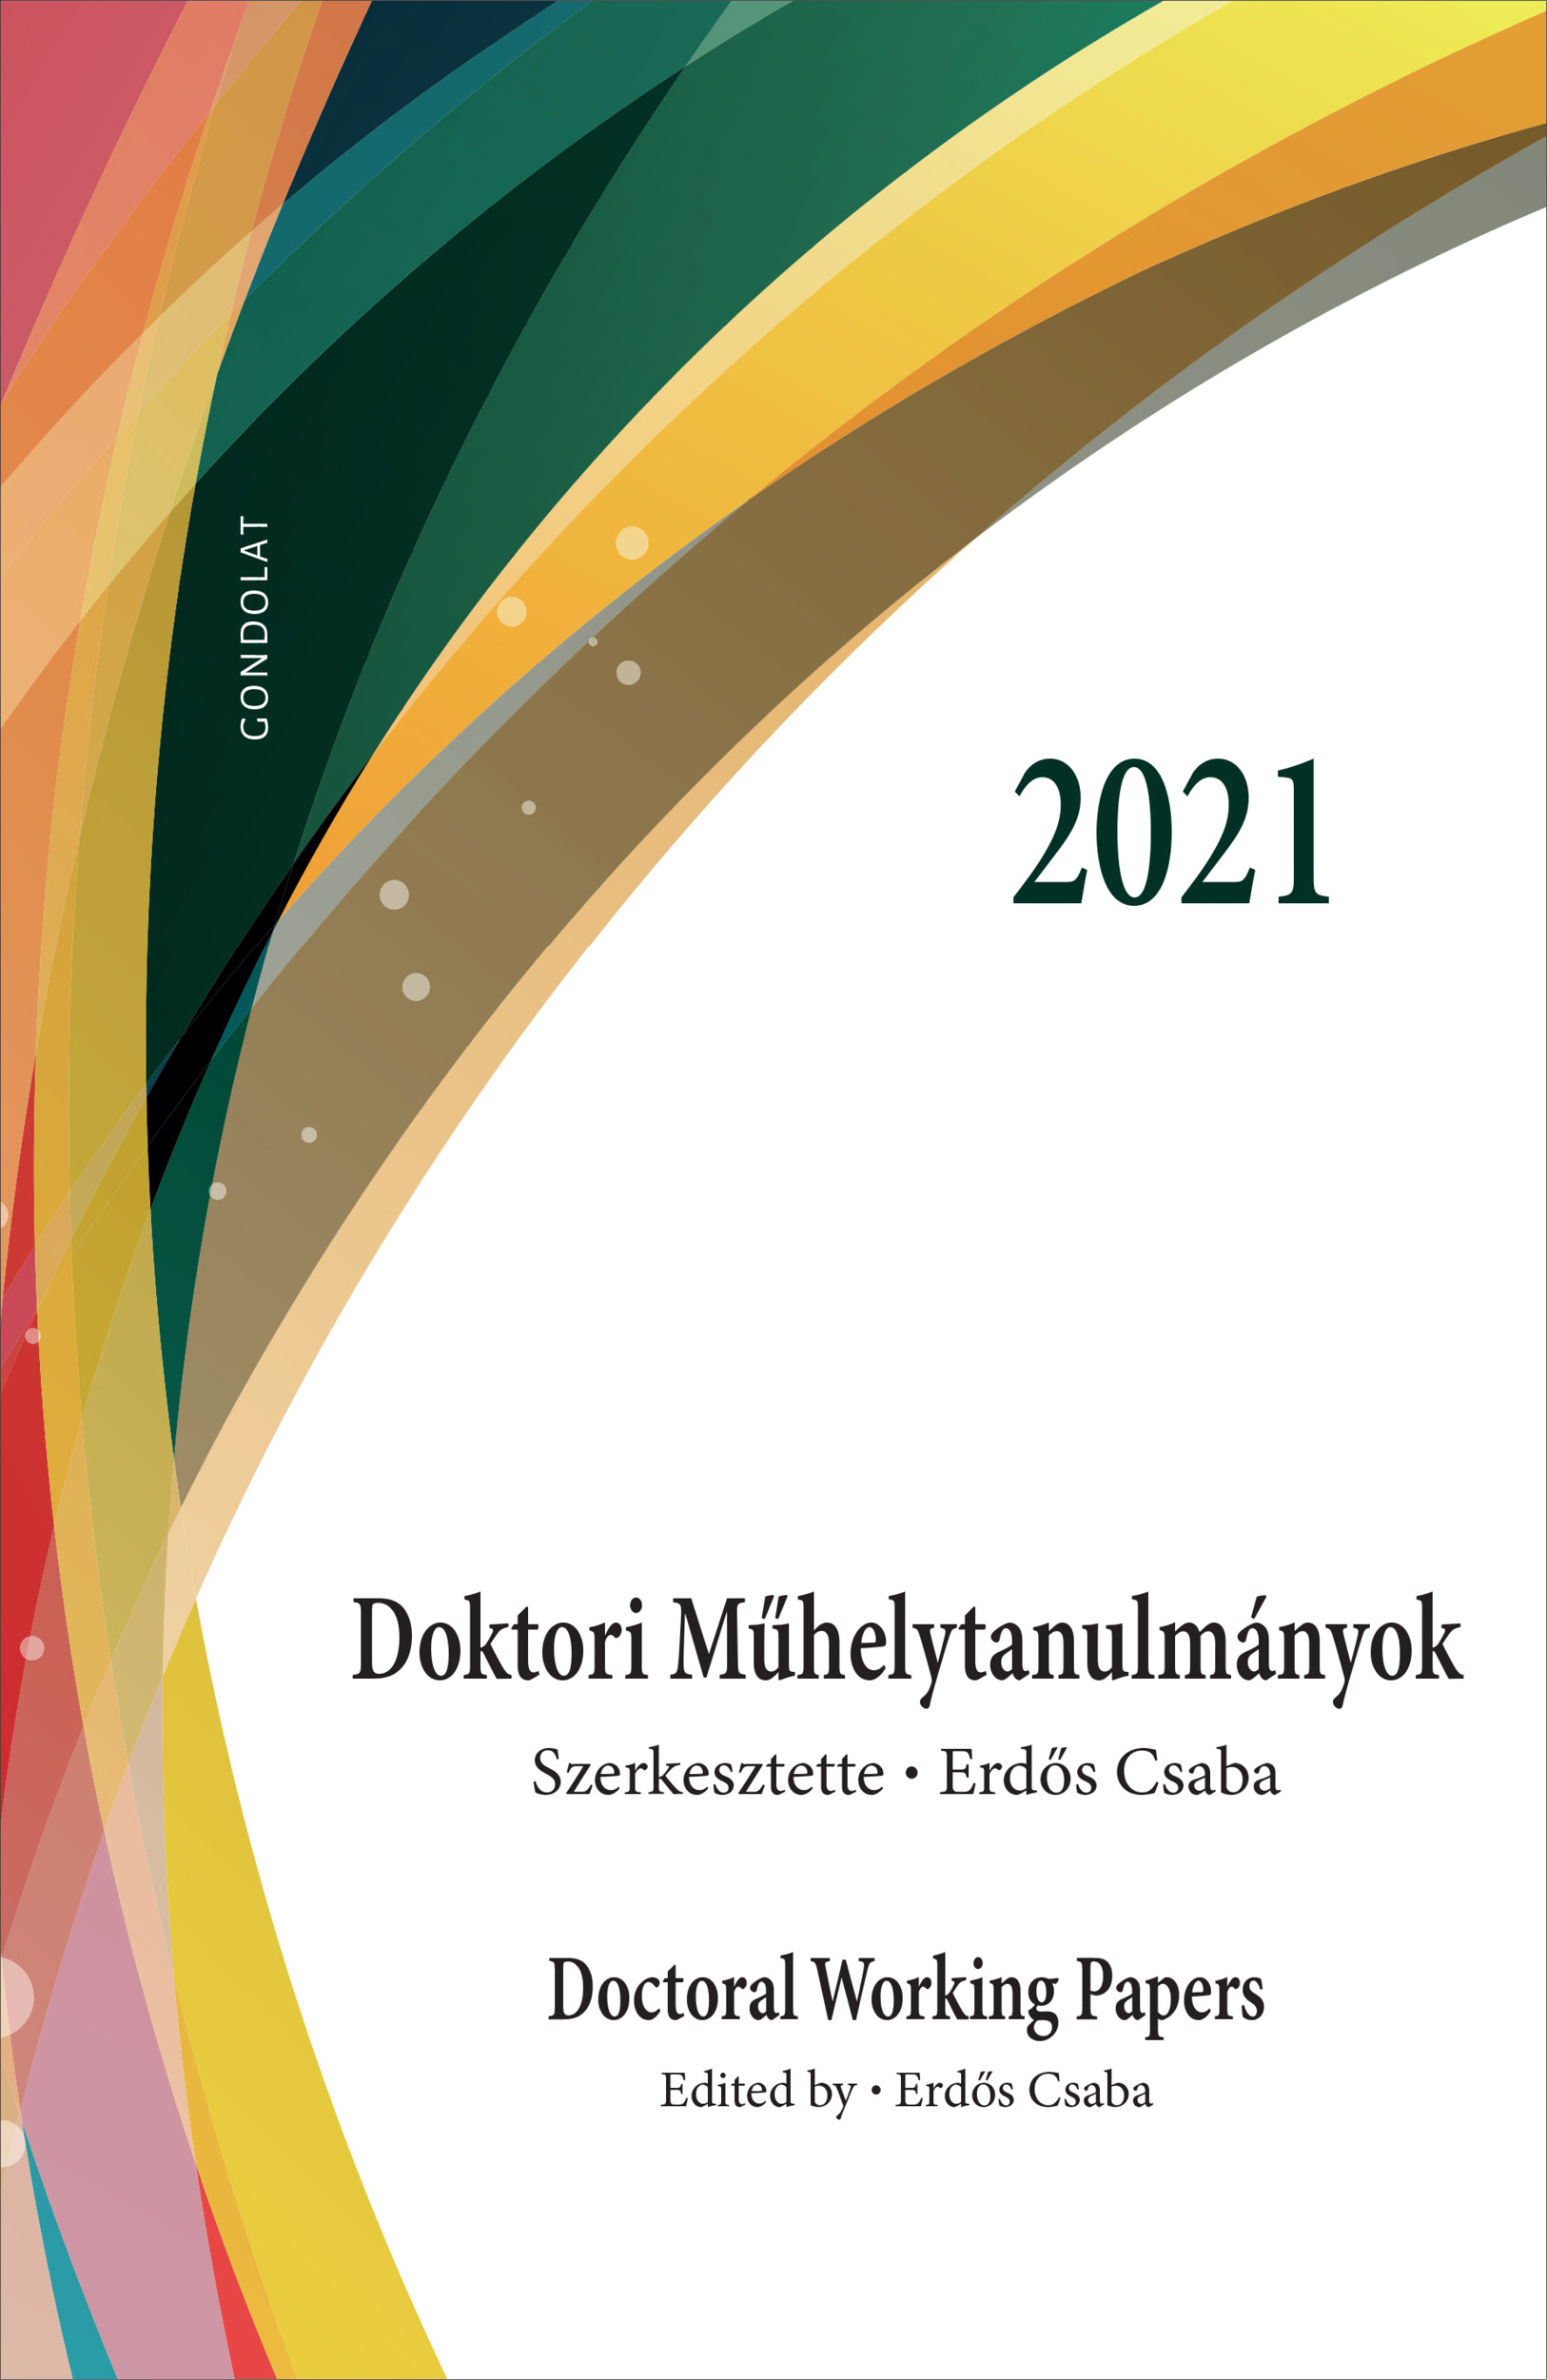 Doktori Műhelytanulmányok 2021 / Doctoral Working Papers 2021